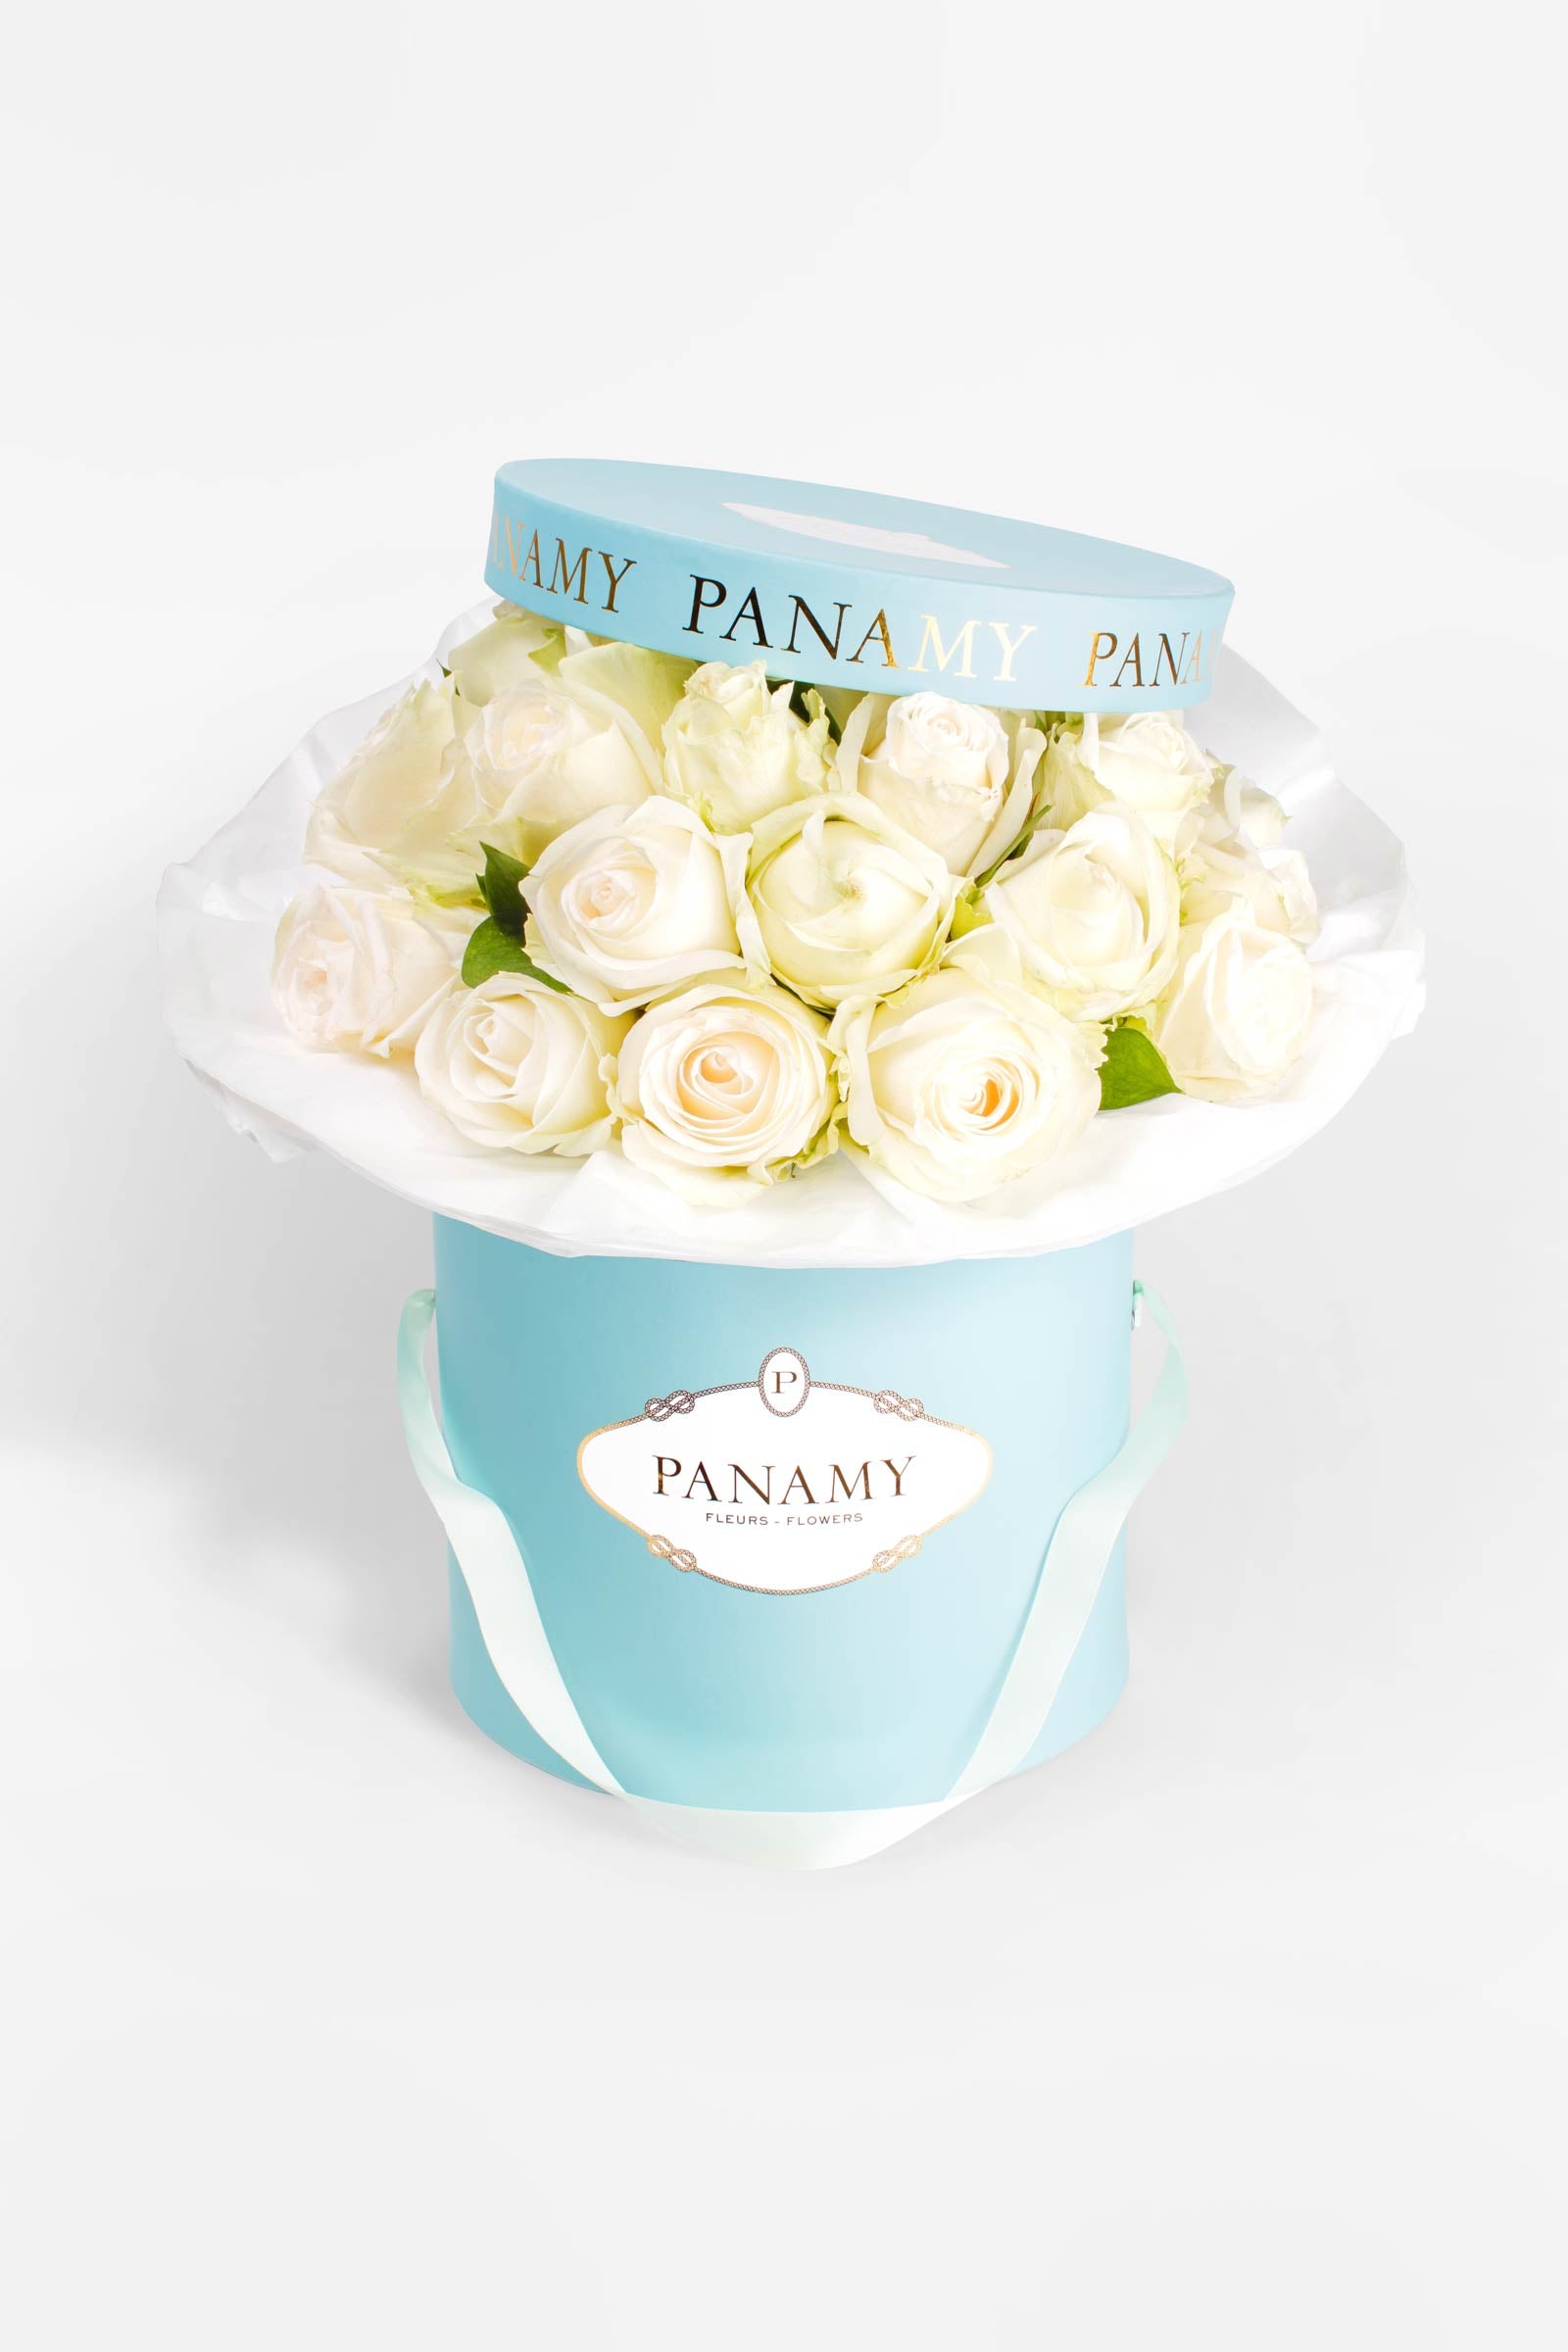 Il Bianchino - Flower Bouquet - Monochrome Collection - PANAMY Flower Delivery in Switzerland, Geneva, Zürich, Basel